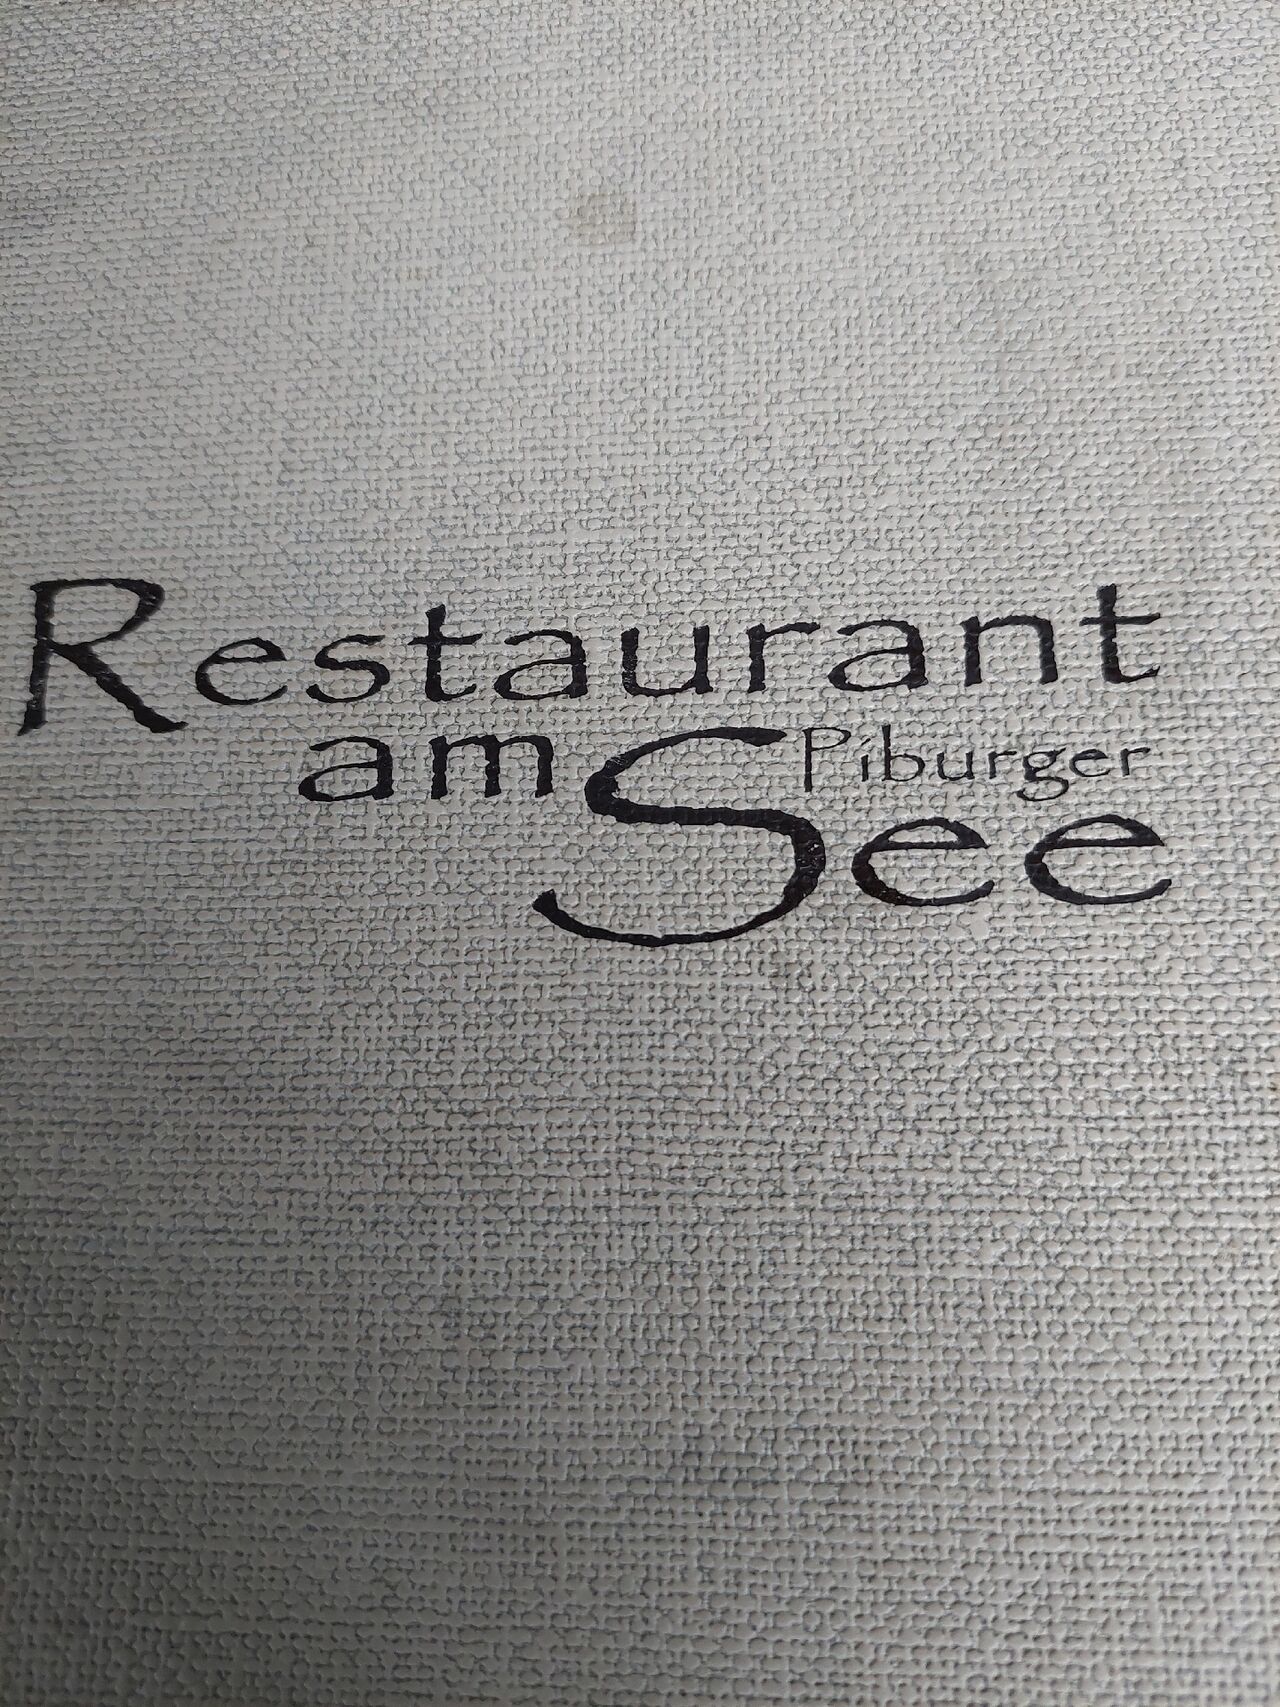 A photo of Restaurant am Piburger See